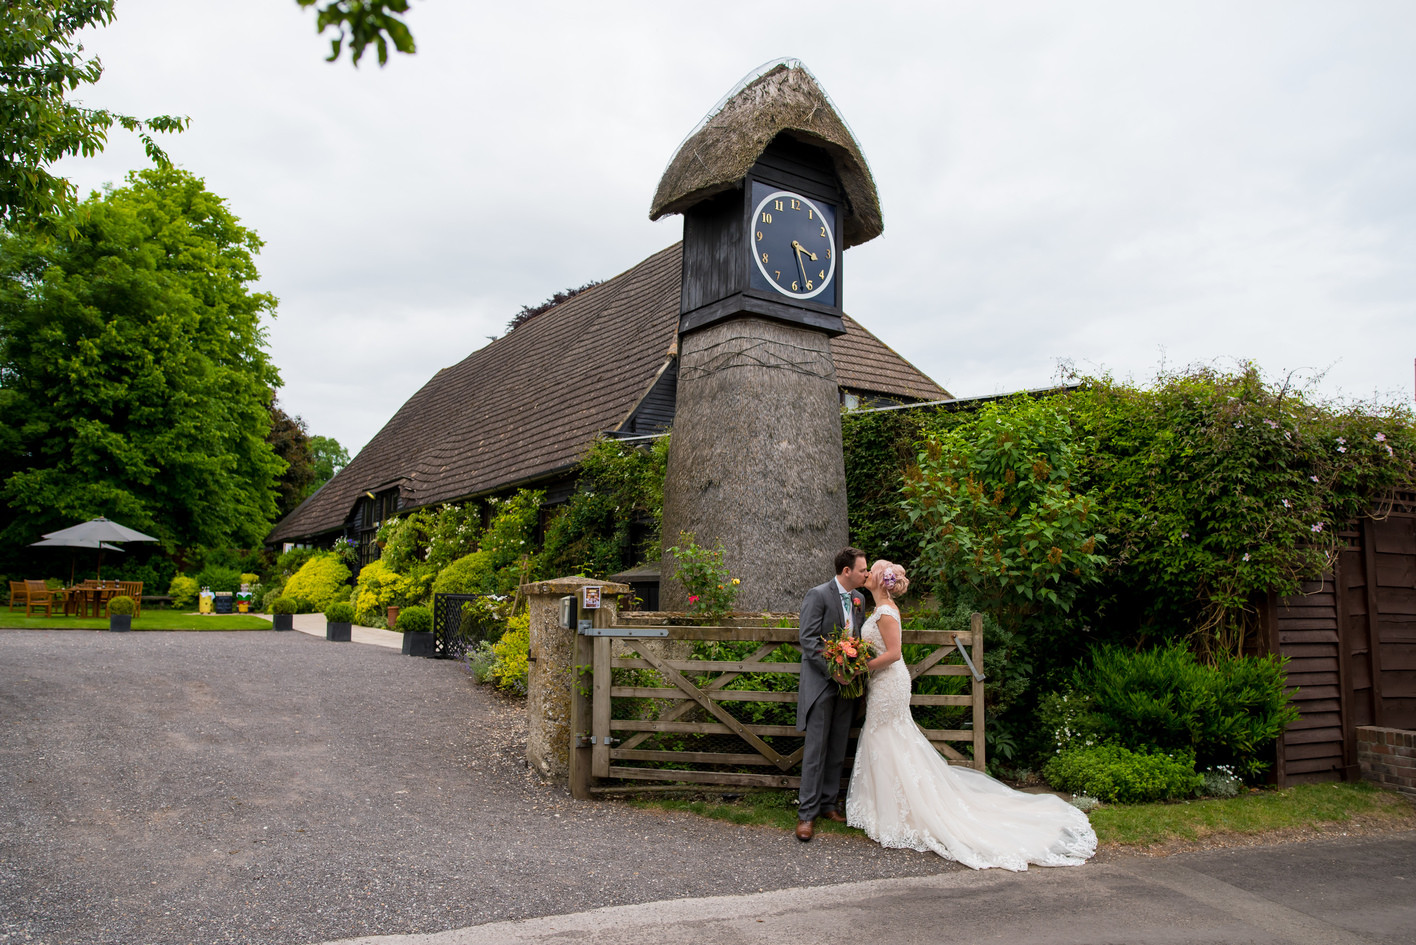 clock barn real wedding, clock barn wedding, barn wedding, rustic wedding, wedding inspiration, hampshire wedding venue